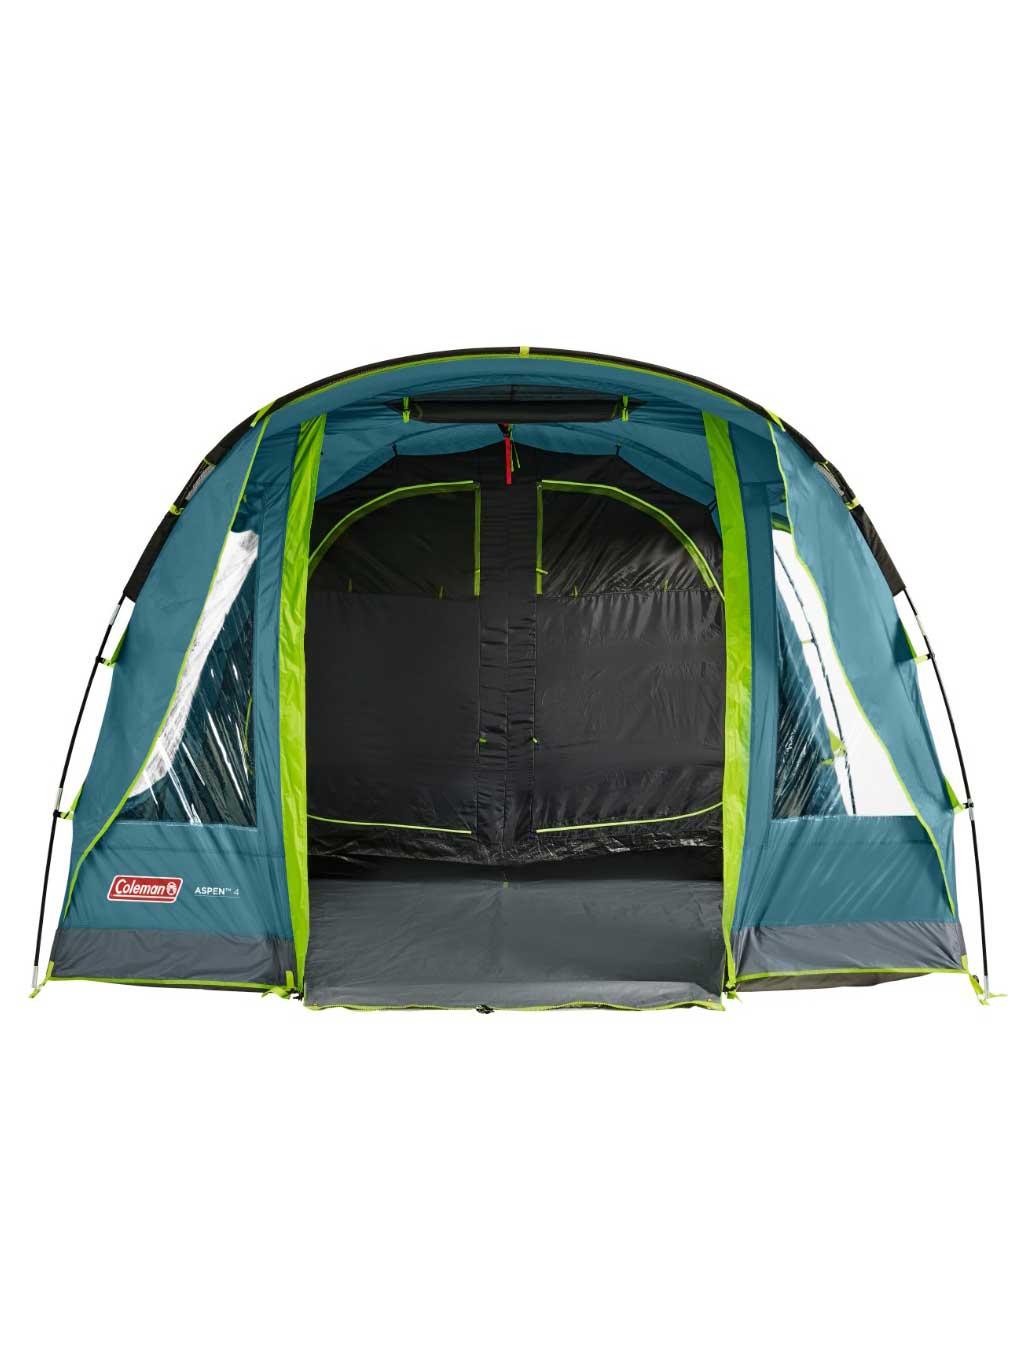 Selected image for COLEMAN Šator Aspen 4 Tent